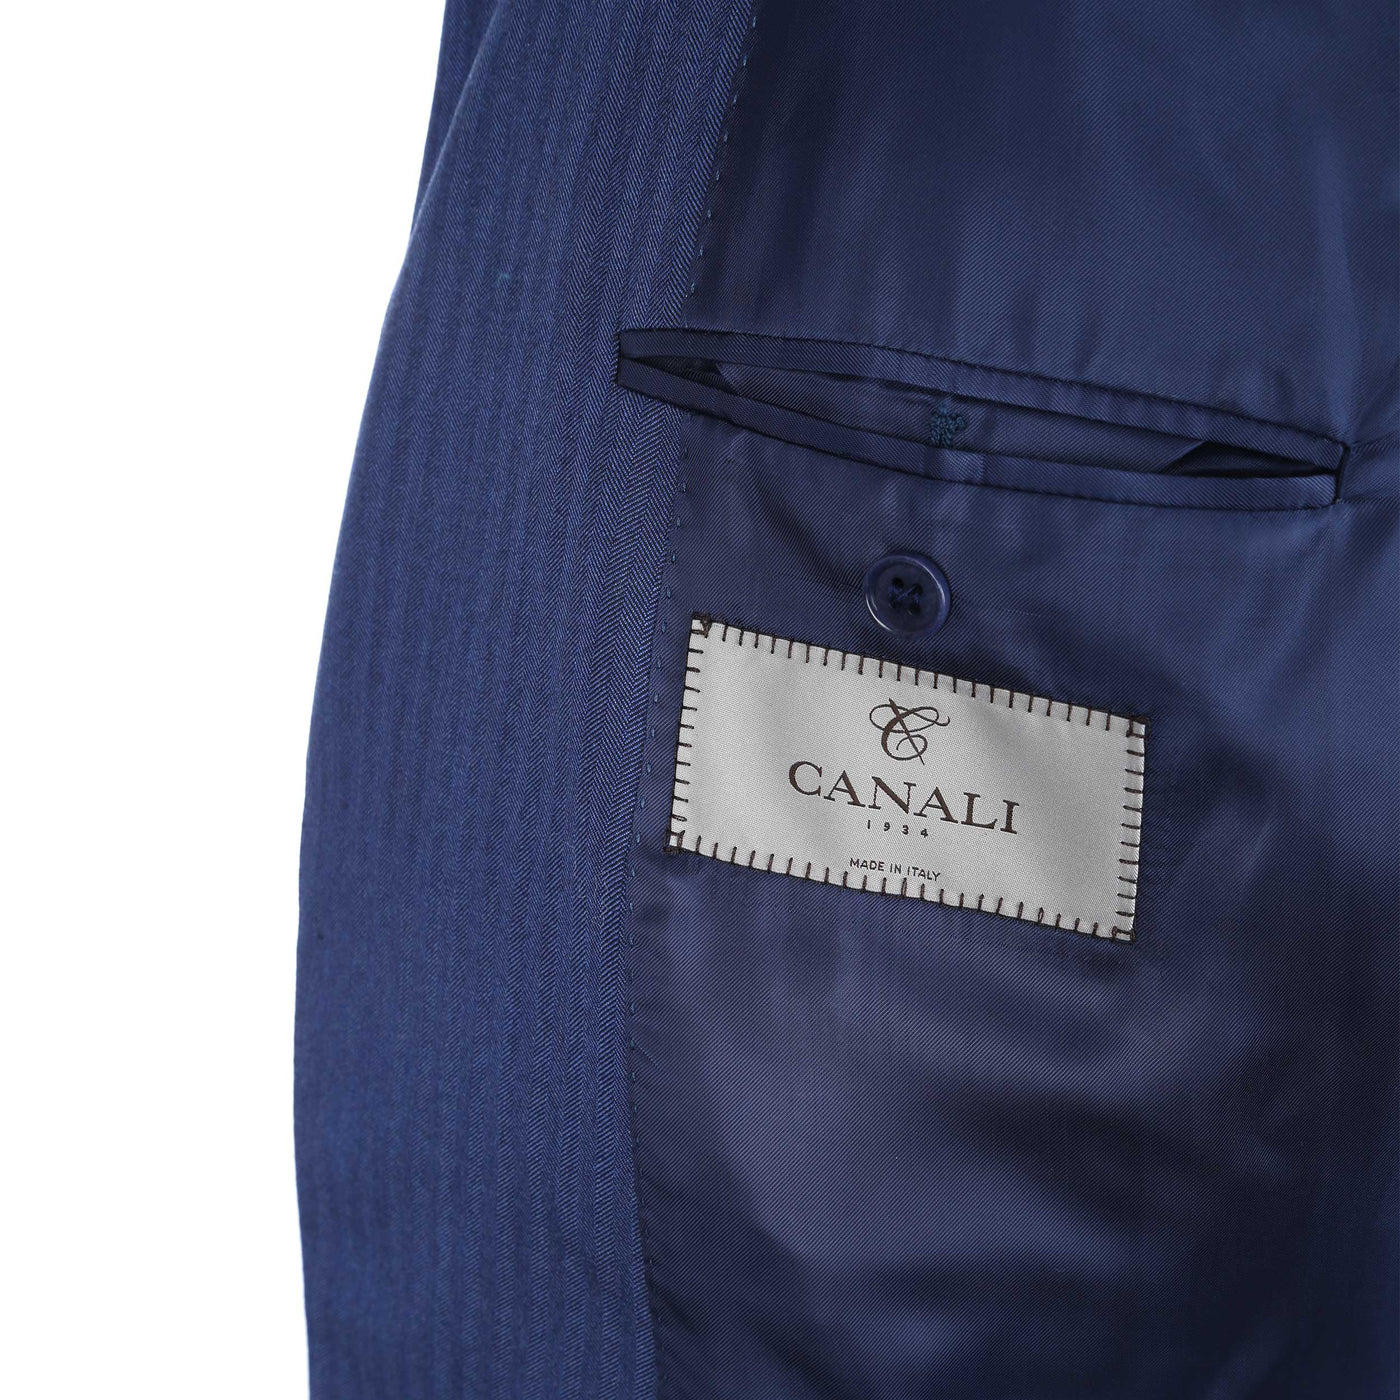 Canali Herringbone Notch Lapel Suit in Mid Blue Inside